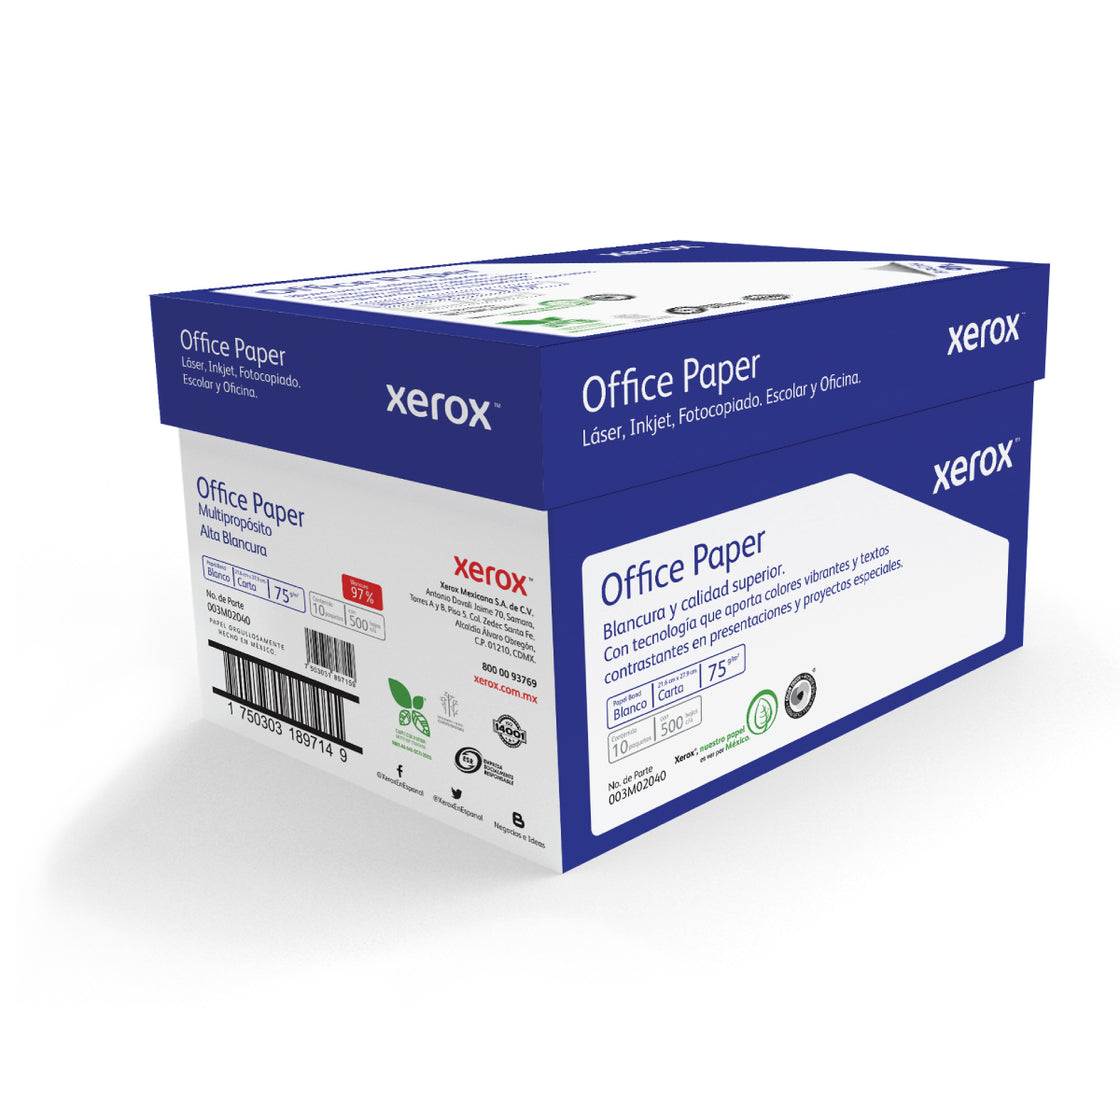 XEROX Hoja de papel bond Carta Office Paper 75 gramos / 97% Blancura